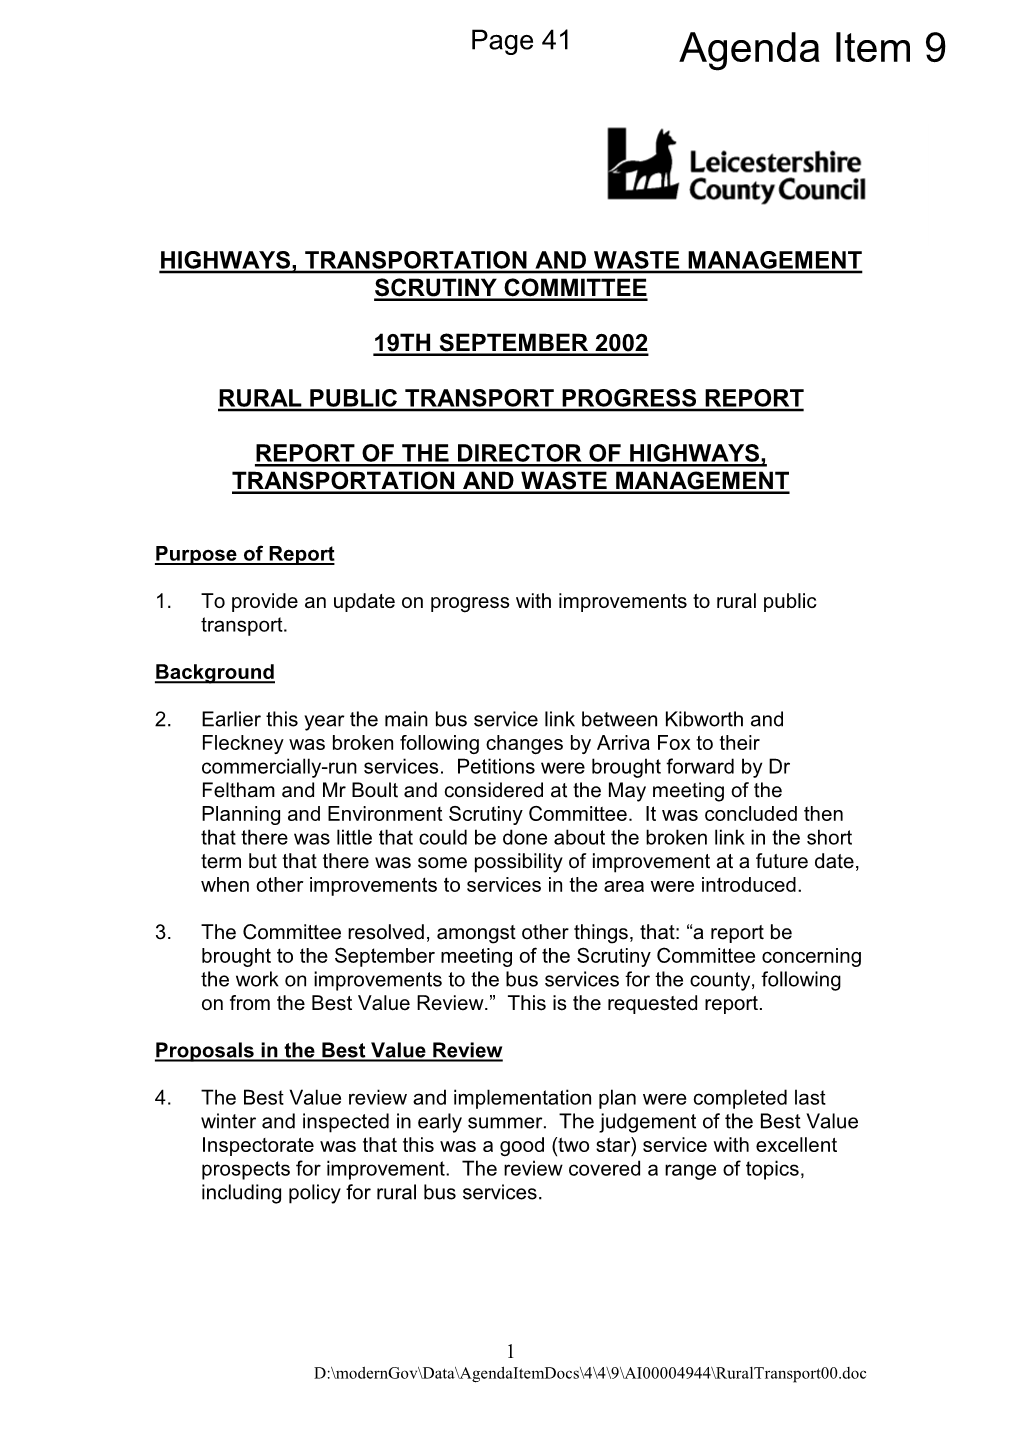 Rural Public Transport PDF 23 KB